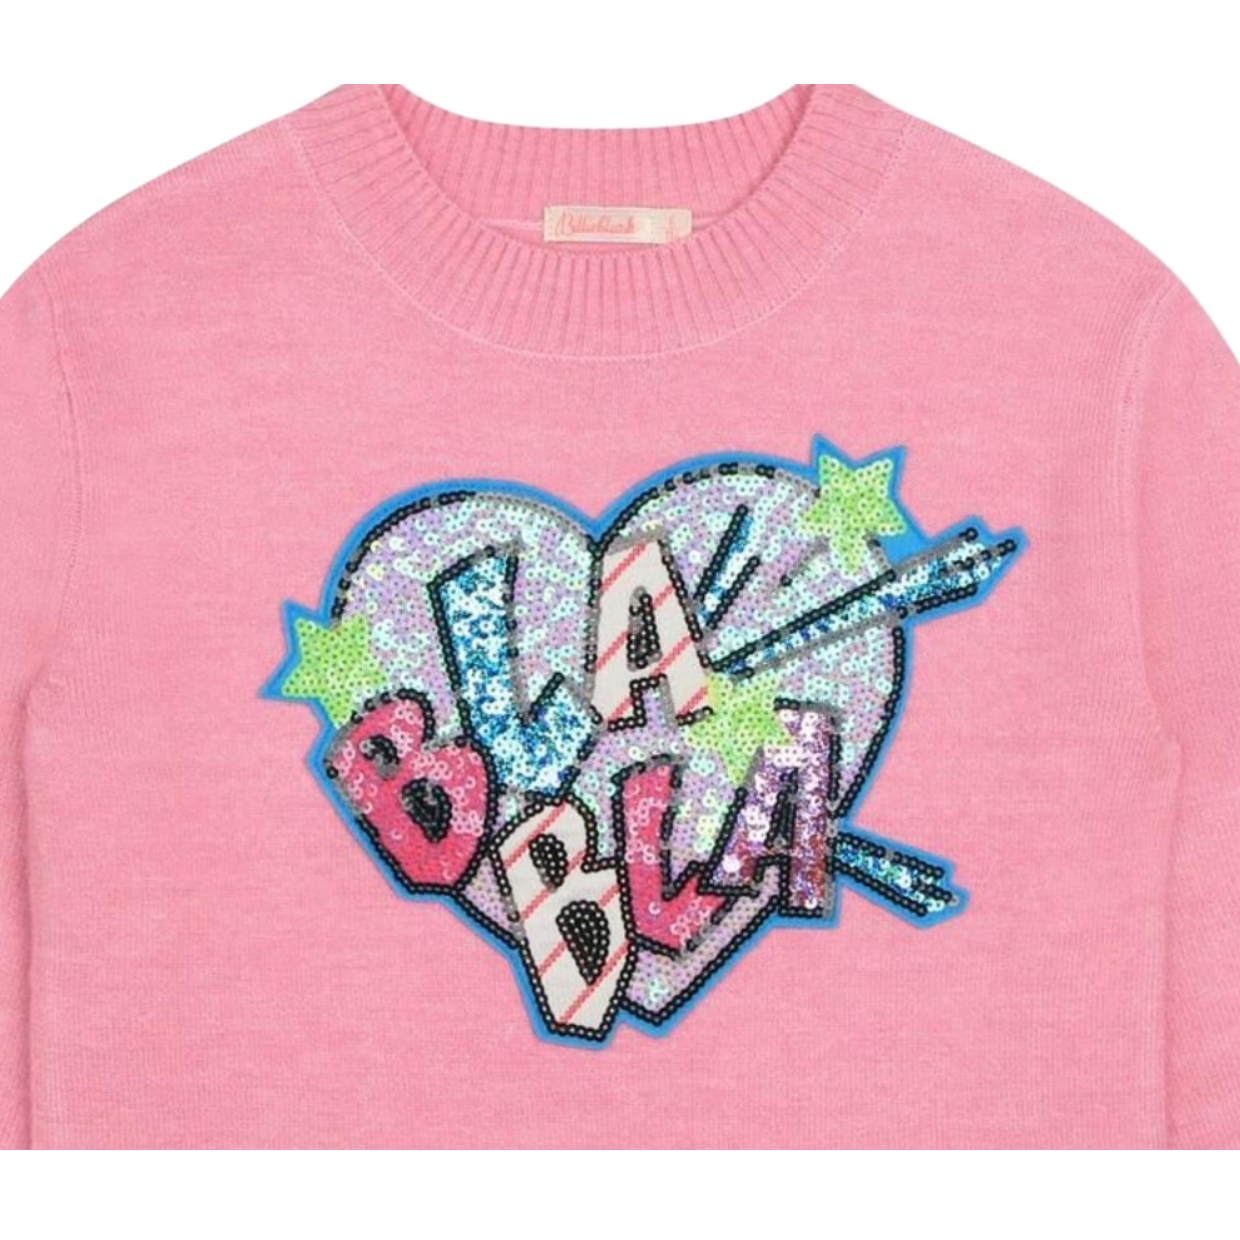 Billieblush Pink Knitted Glitter Sweater